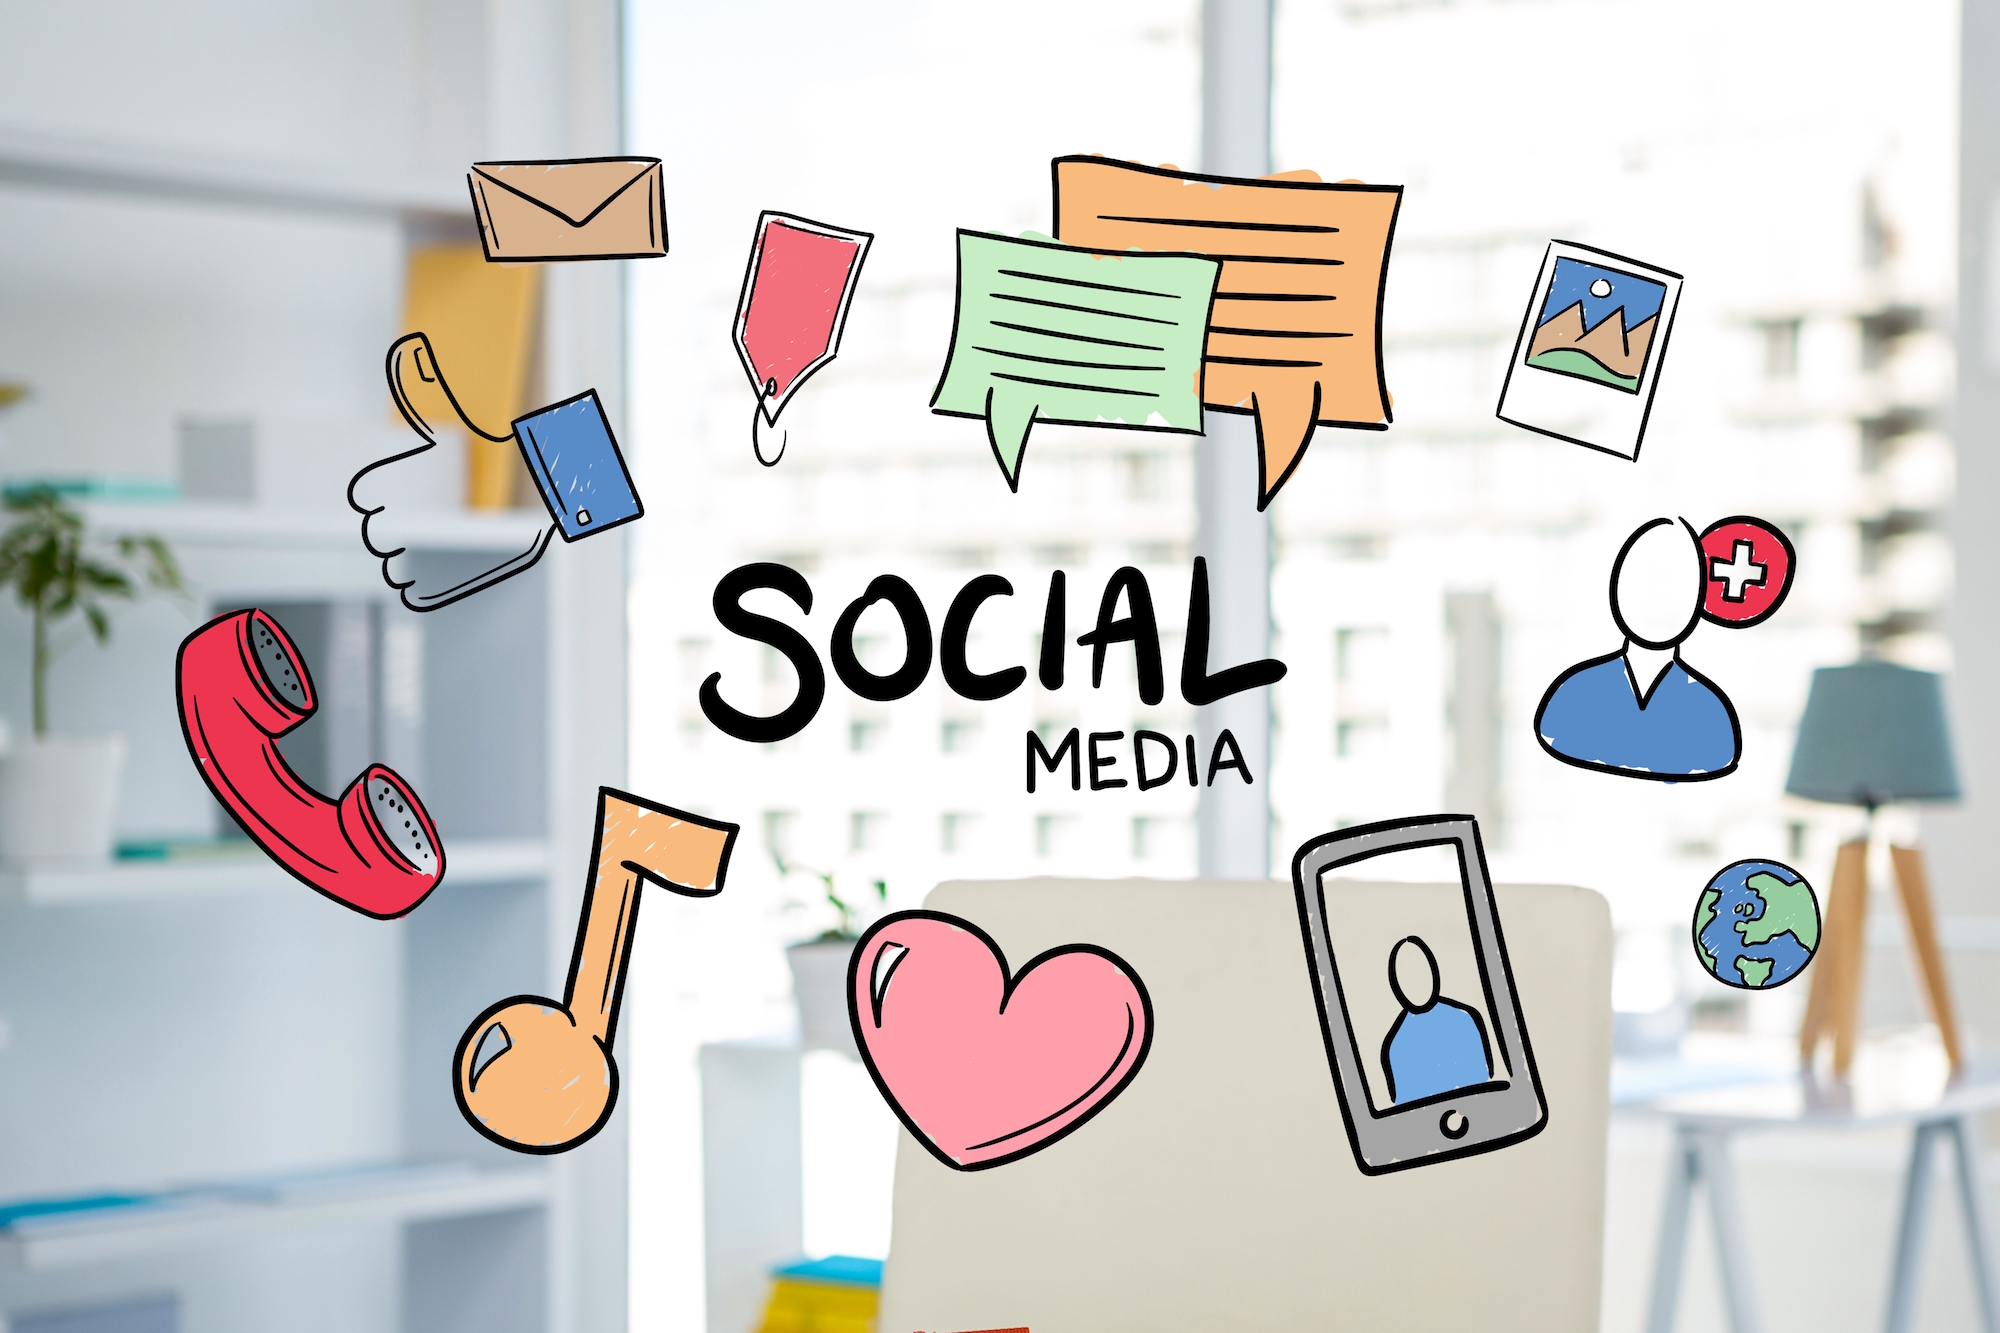 Social media agency Dubai